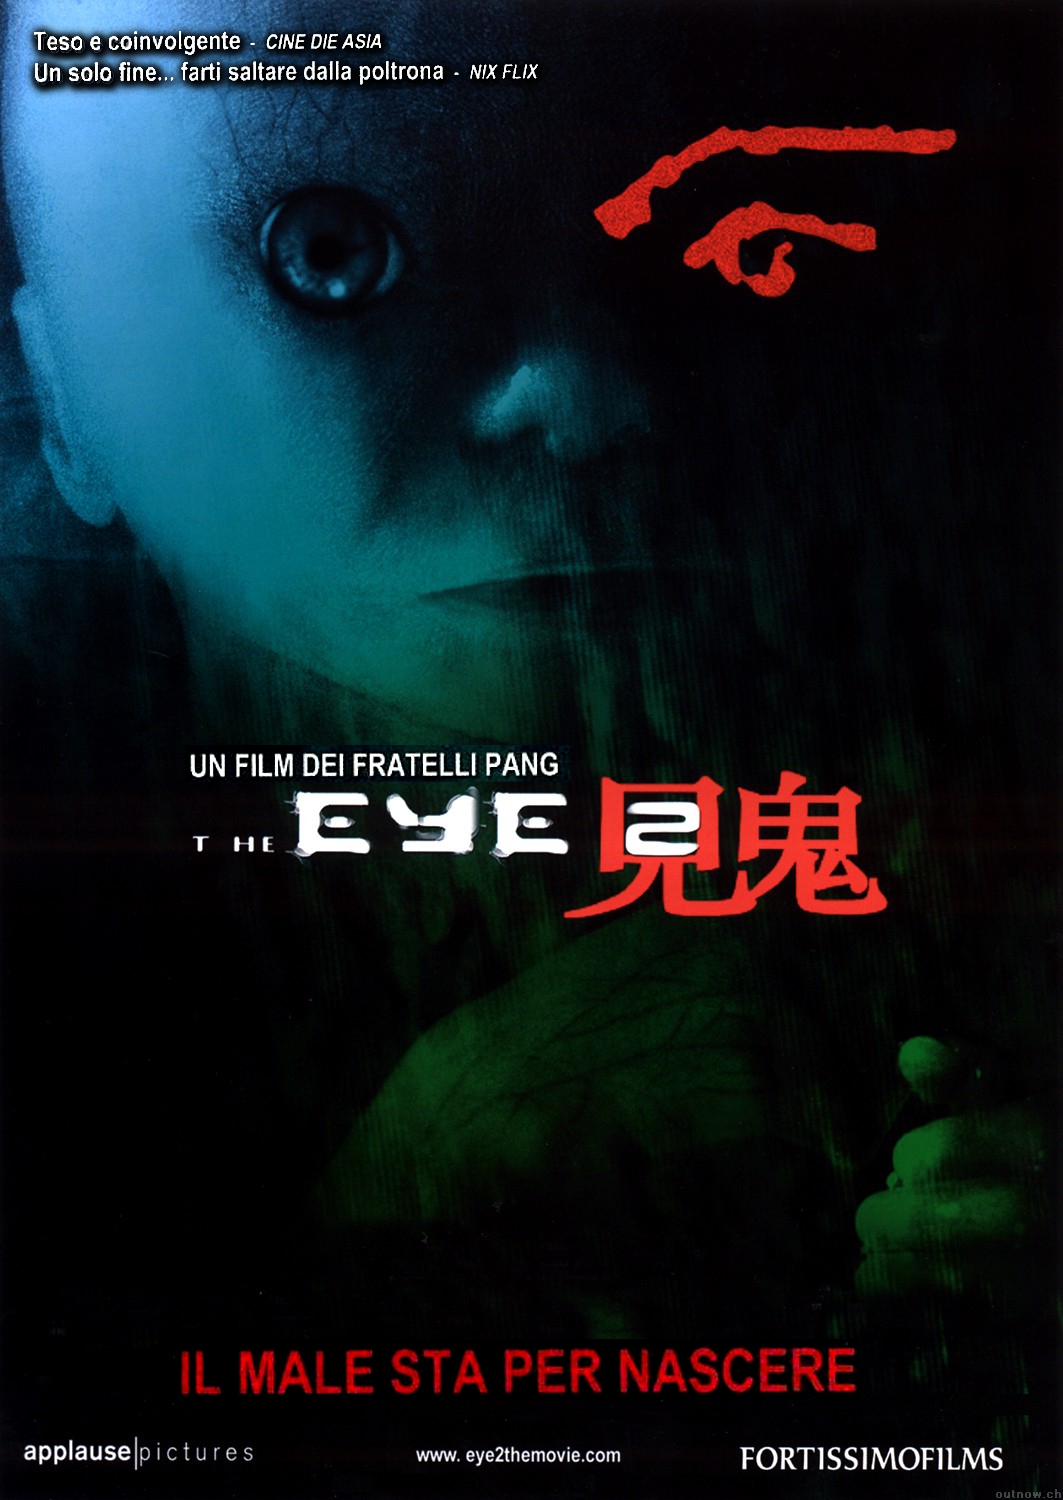 The Eye 2 (2004)